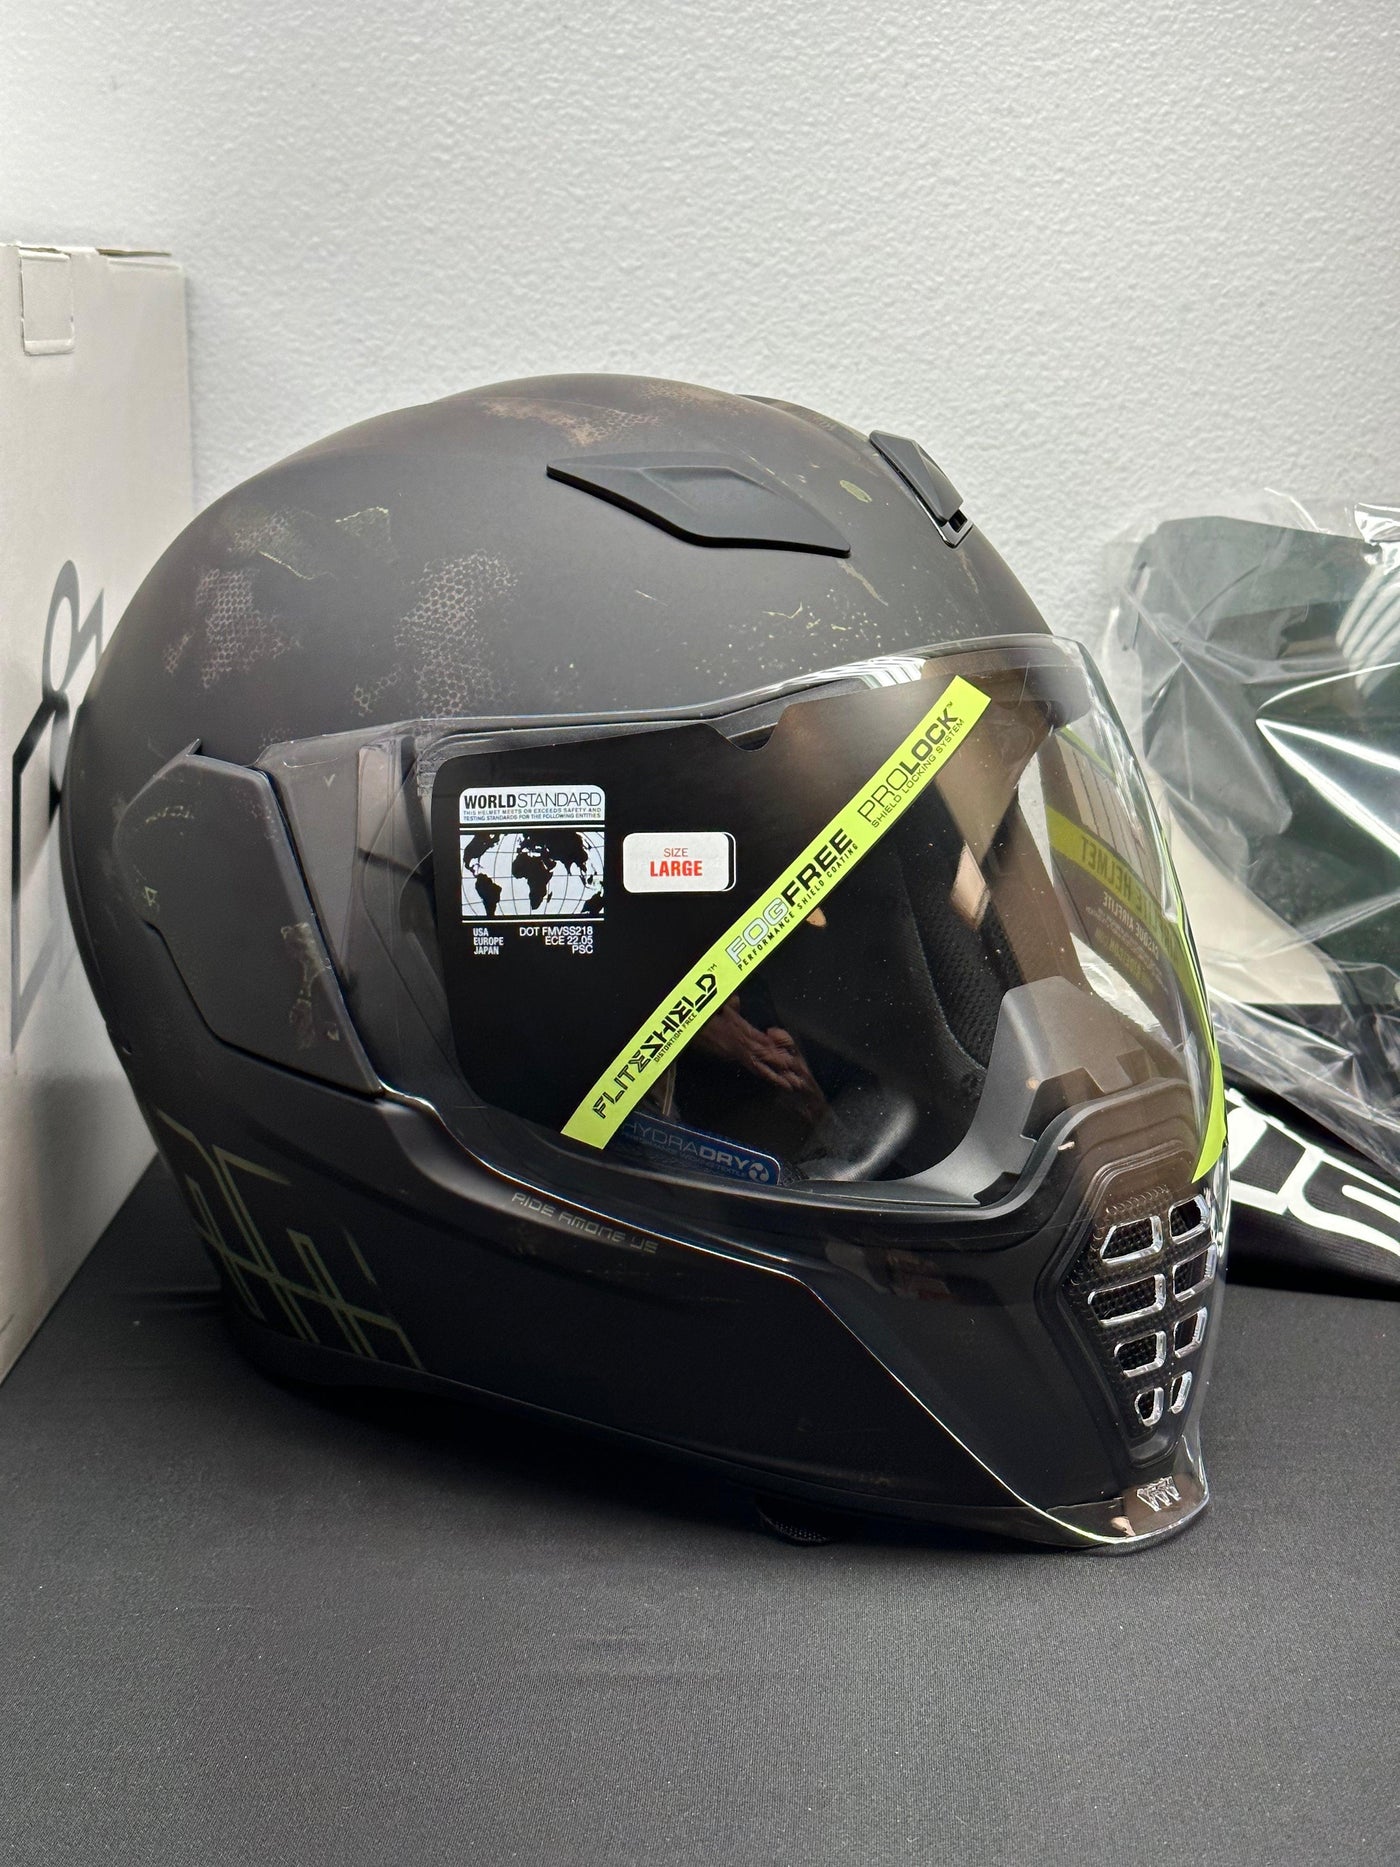 Icon Airflite Demo MIPS Black Helmet Size Large - Open Box - Motor Psycho Sport